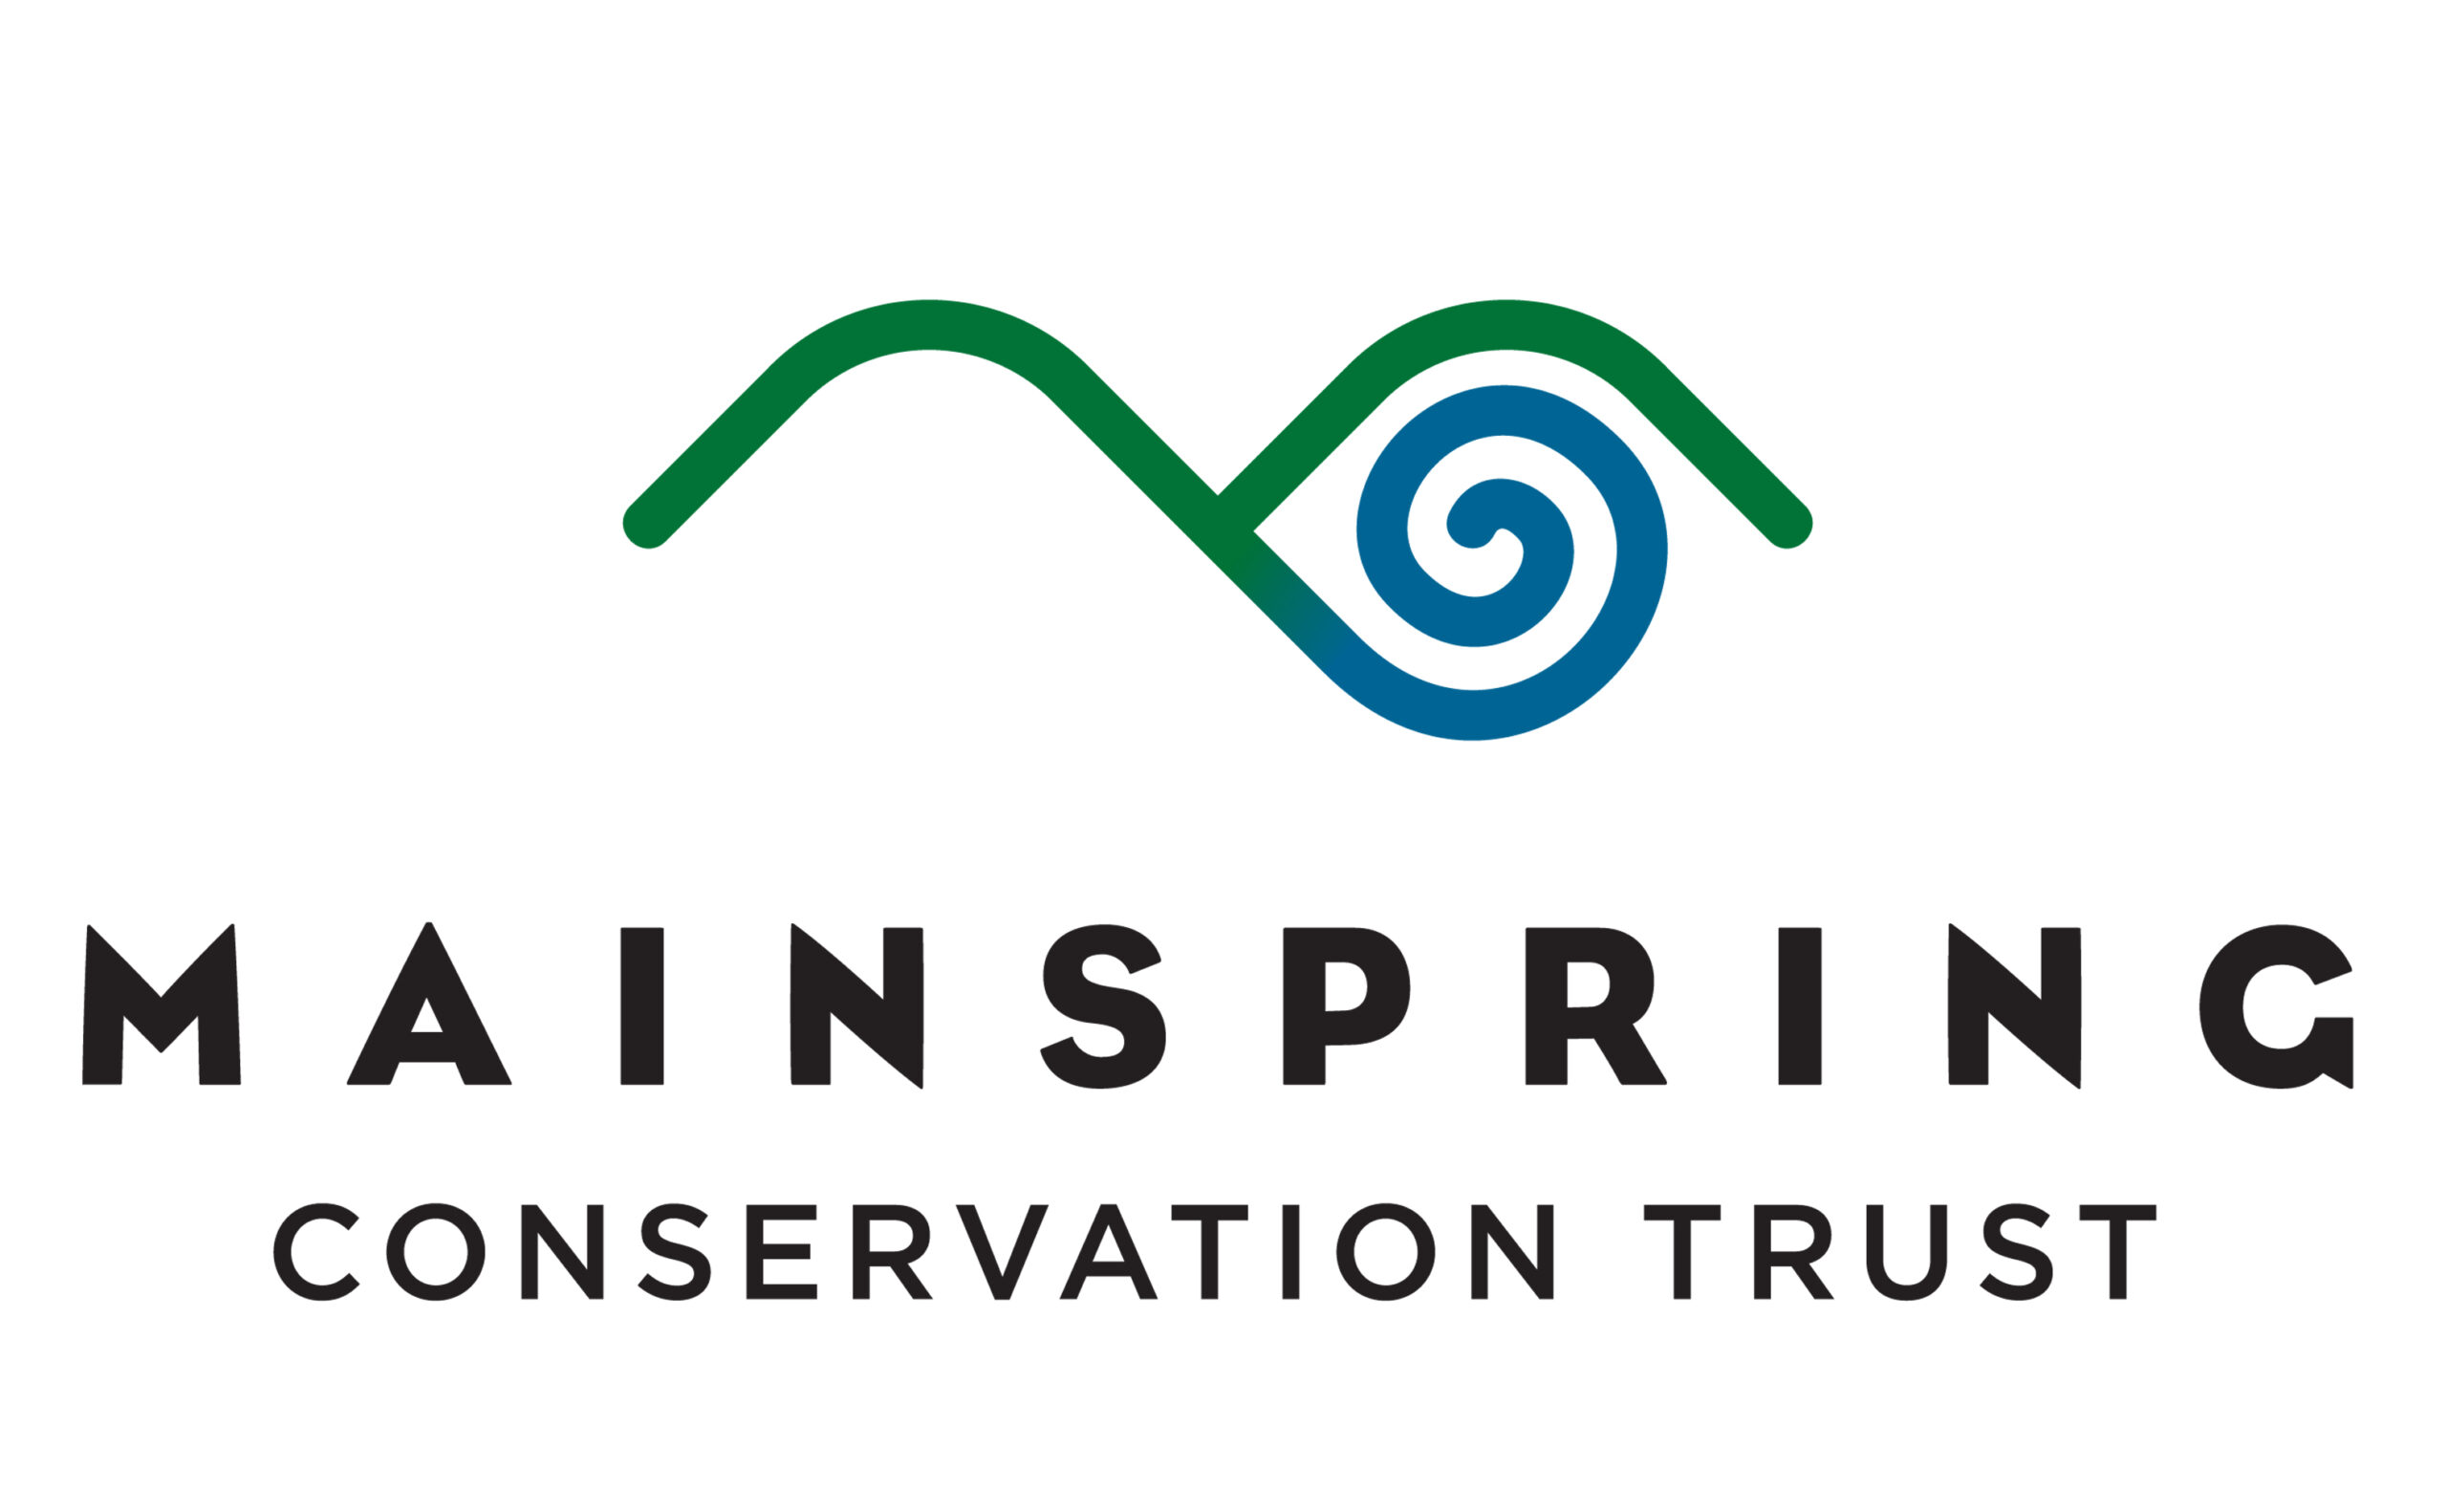 Mainspring Conservation Trust, Inc